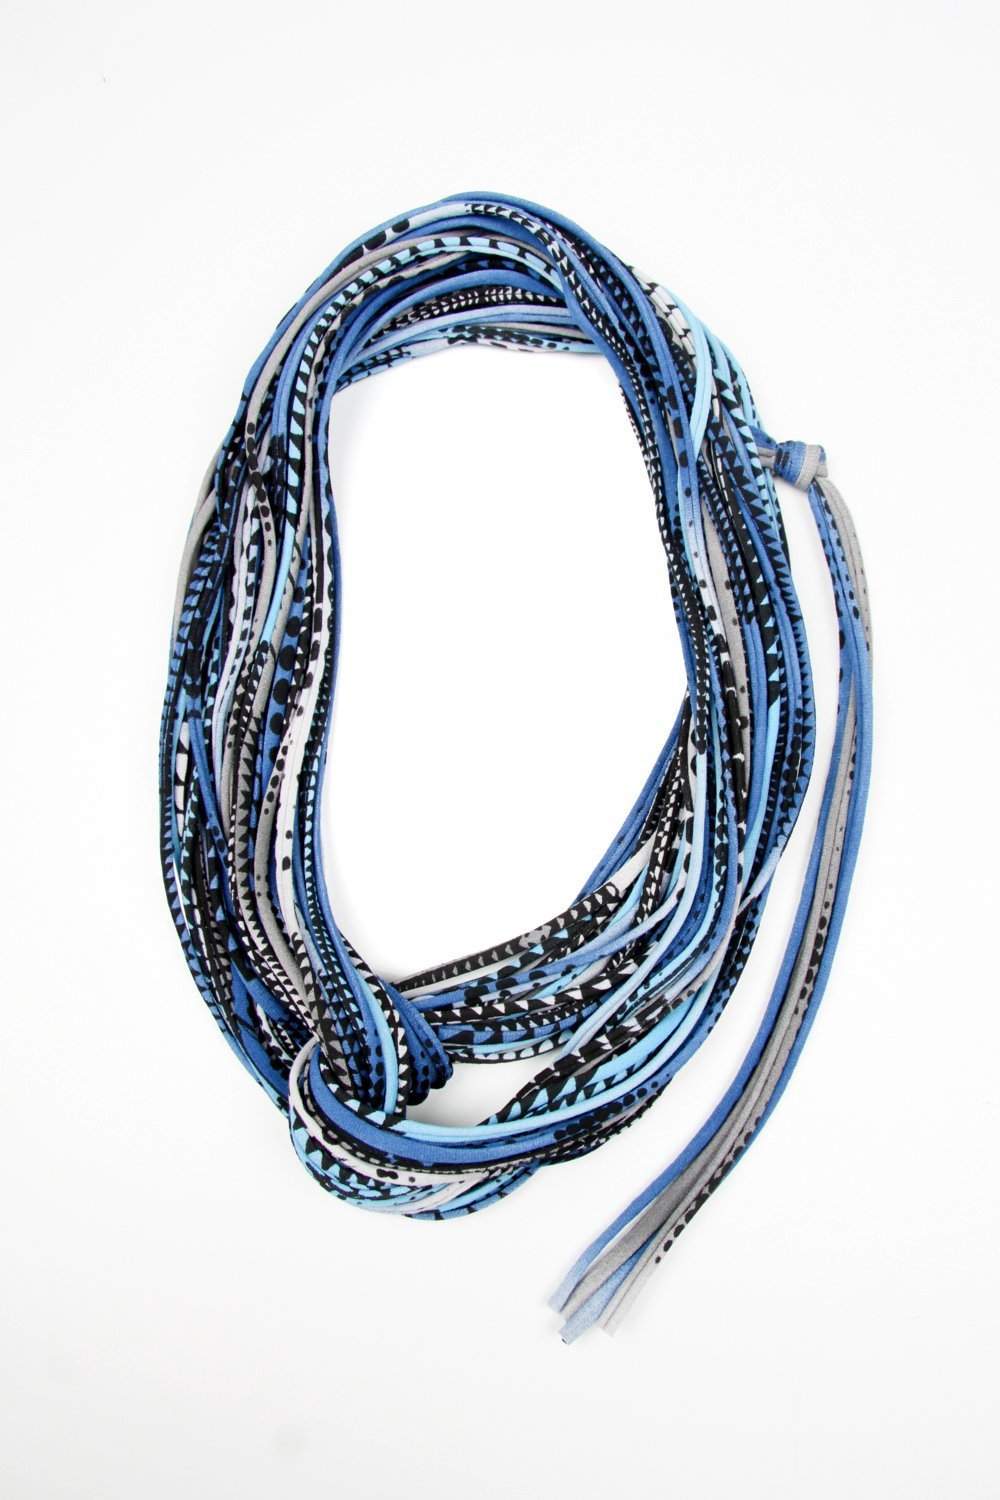 infinity scarves-Blue Gray Black Infinity Scarf-Necklush